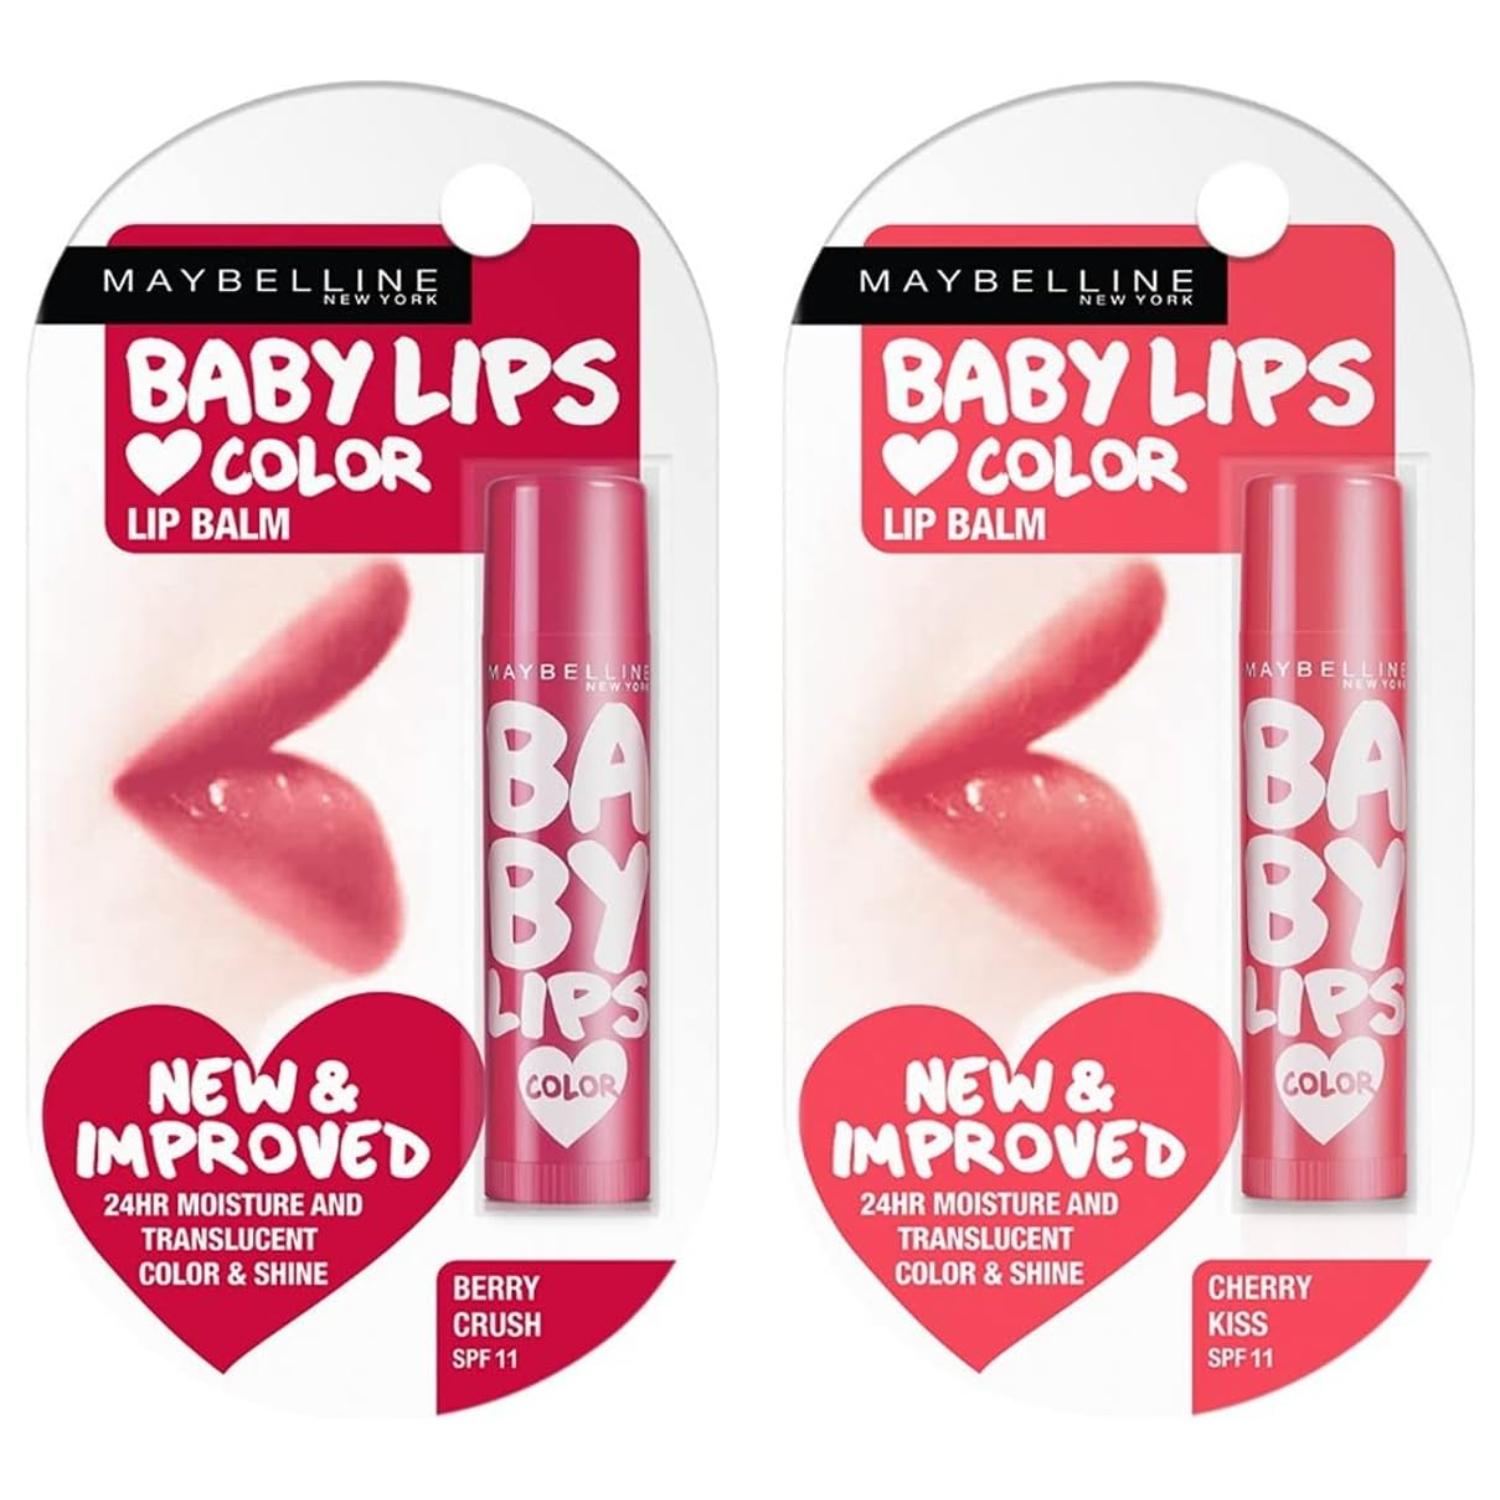 Maybelline New York | Maybelline New York Baby Lips Pack of 2 (Berry Crush & Cherry Kiss)